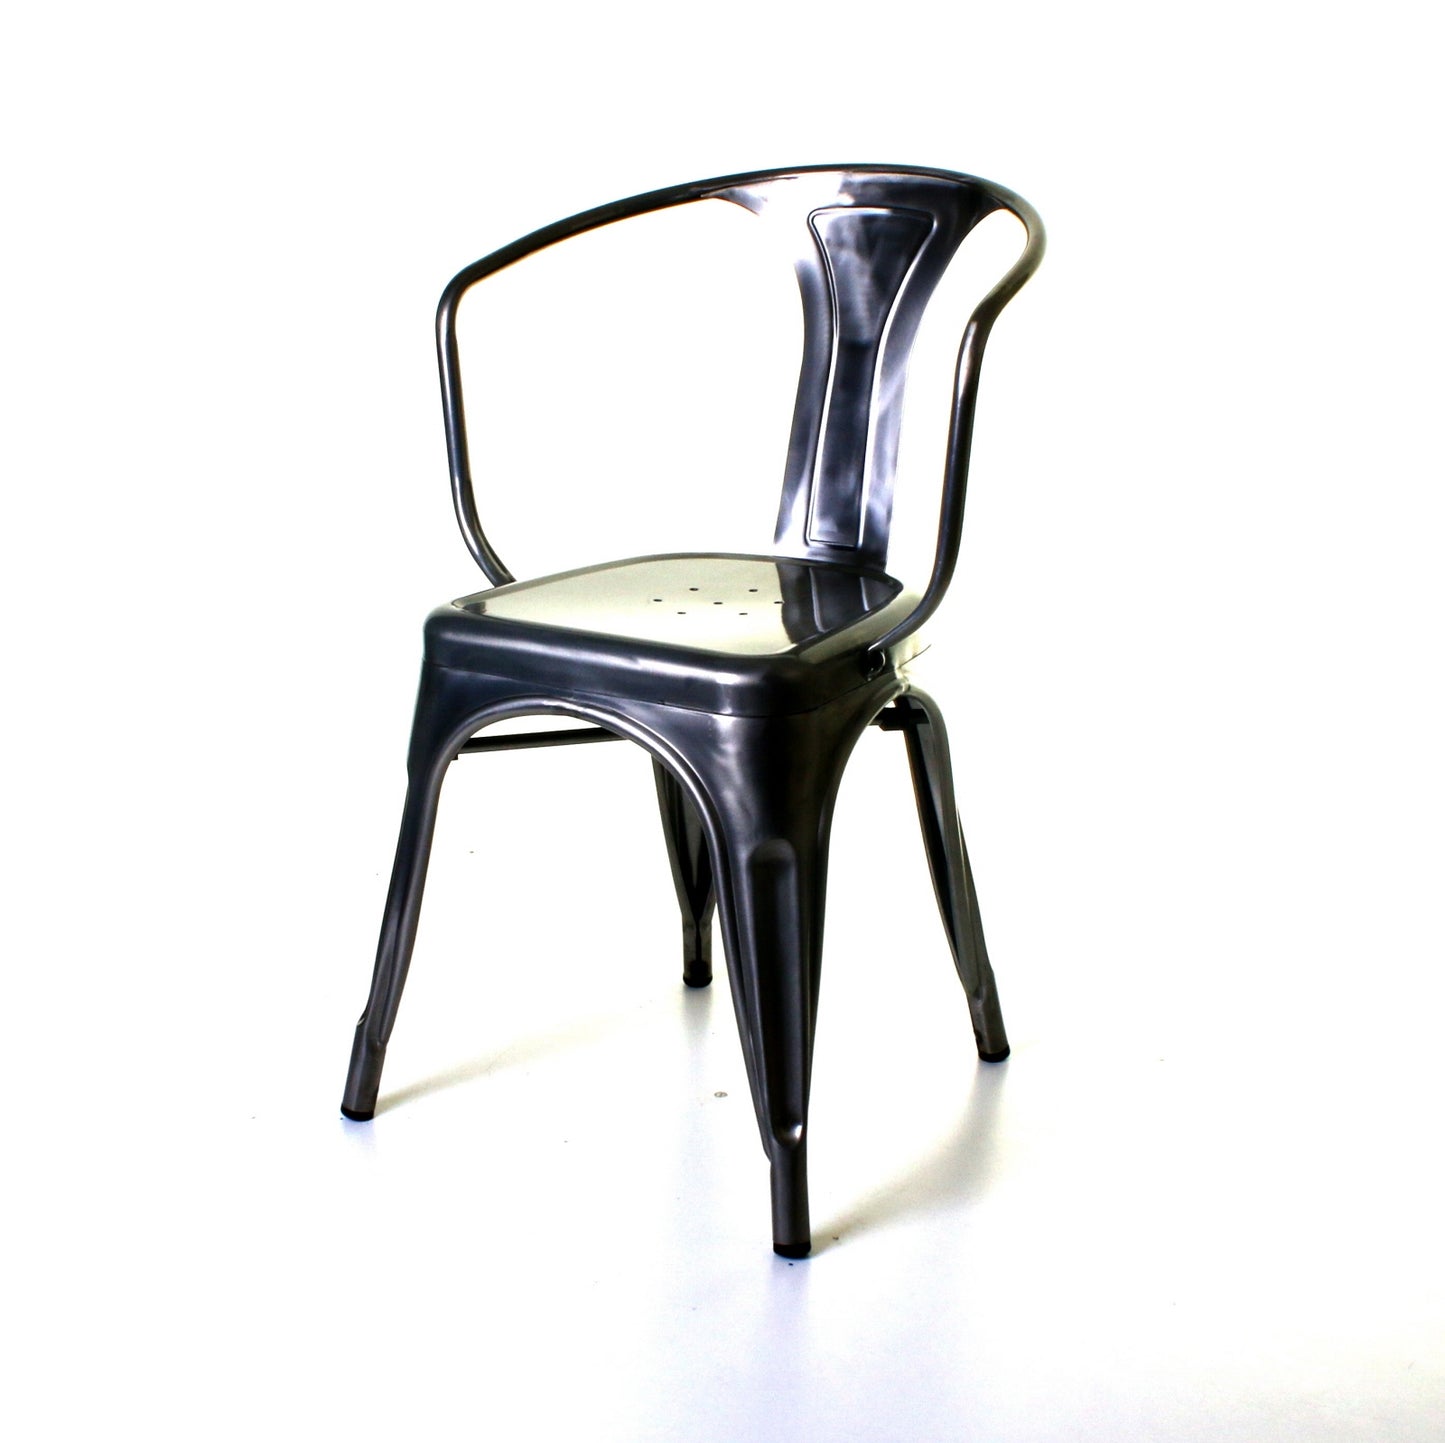 5PC Prato Table & 4 Forli Chairs Set - Steel